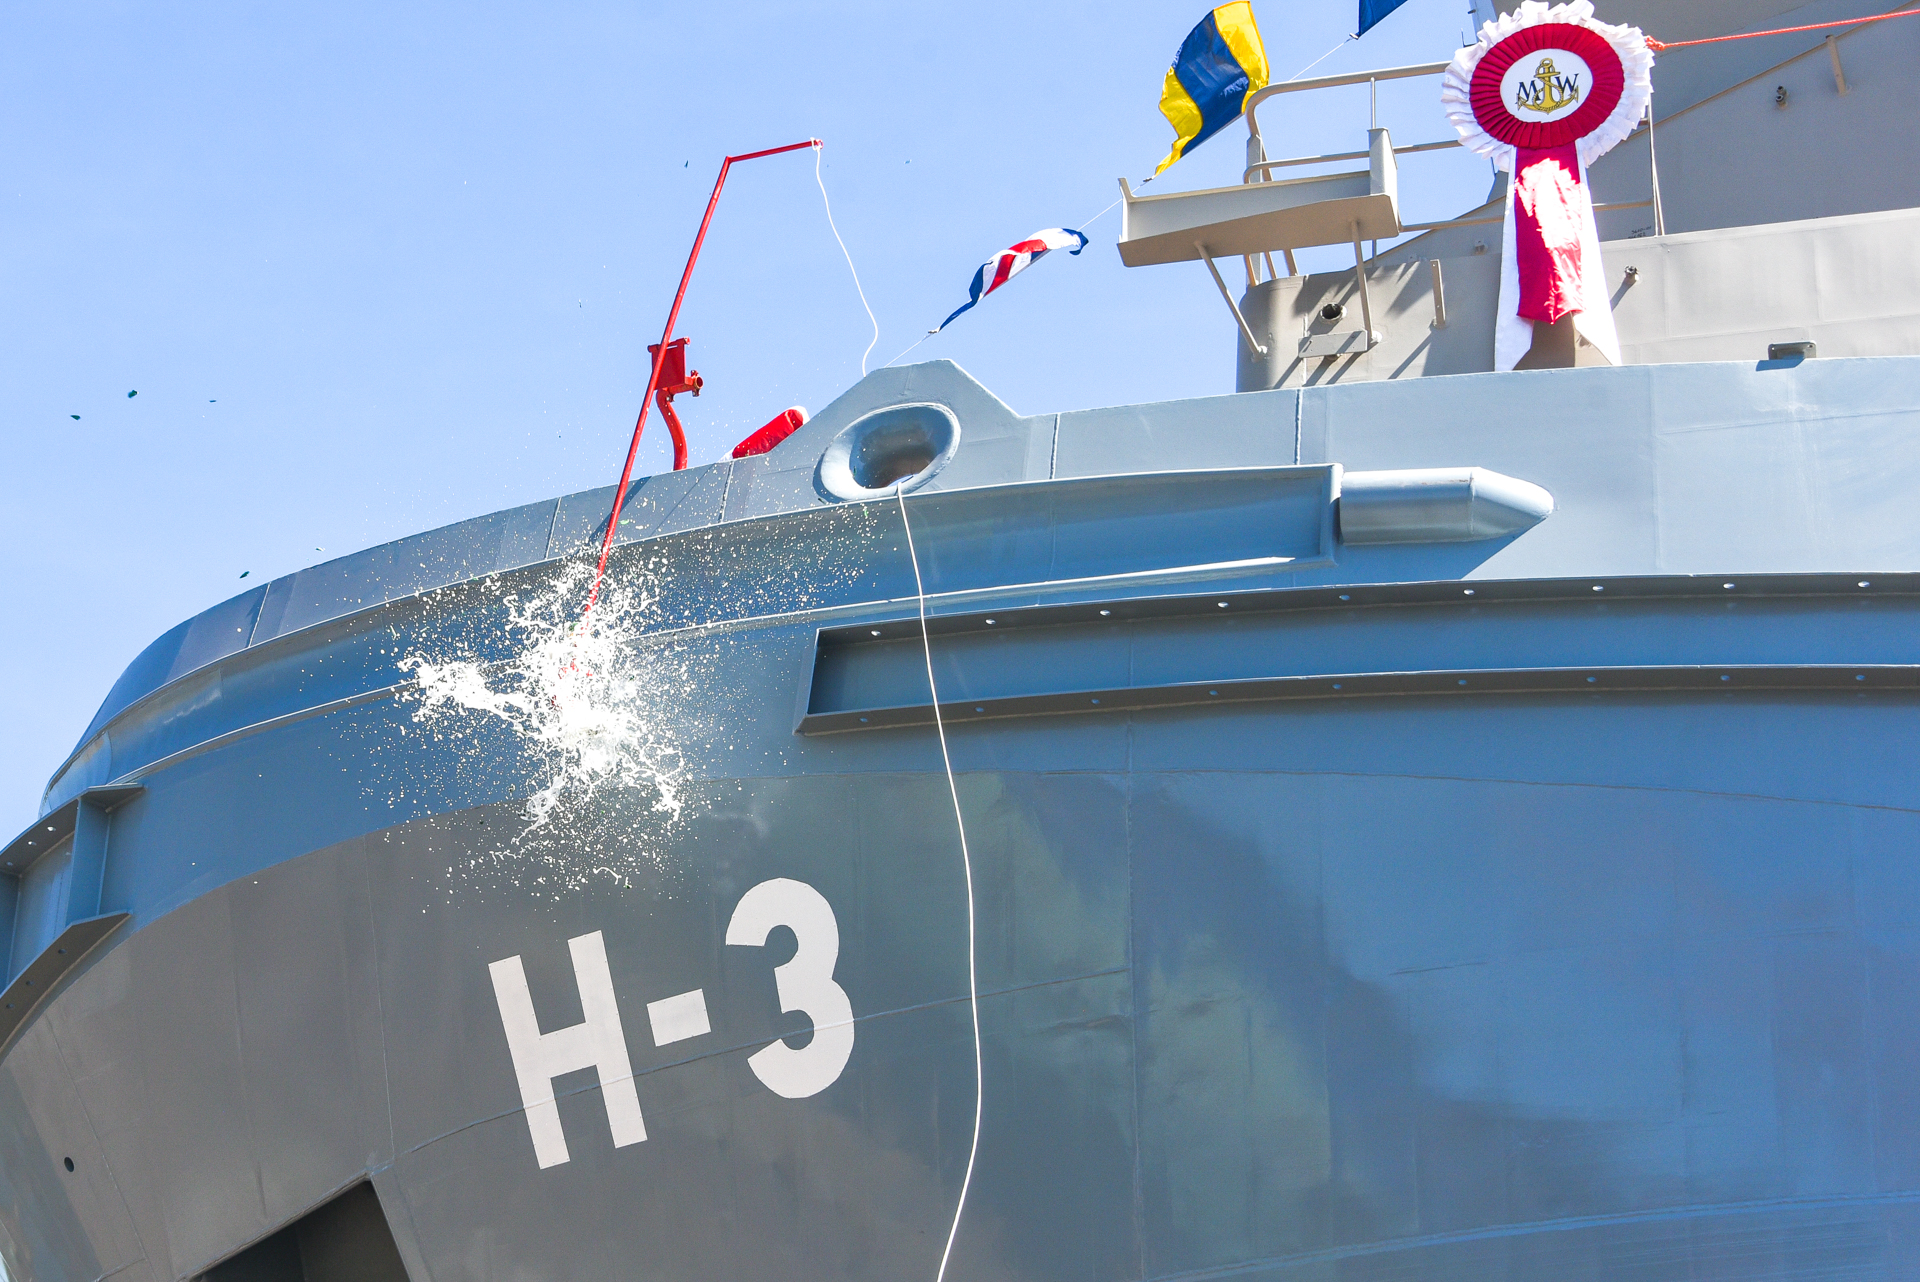 Launching of H-3 tugboat ‘Leszko’ for the Polish Navy [photo, video] - MarinePoland.com